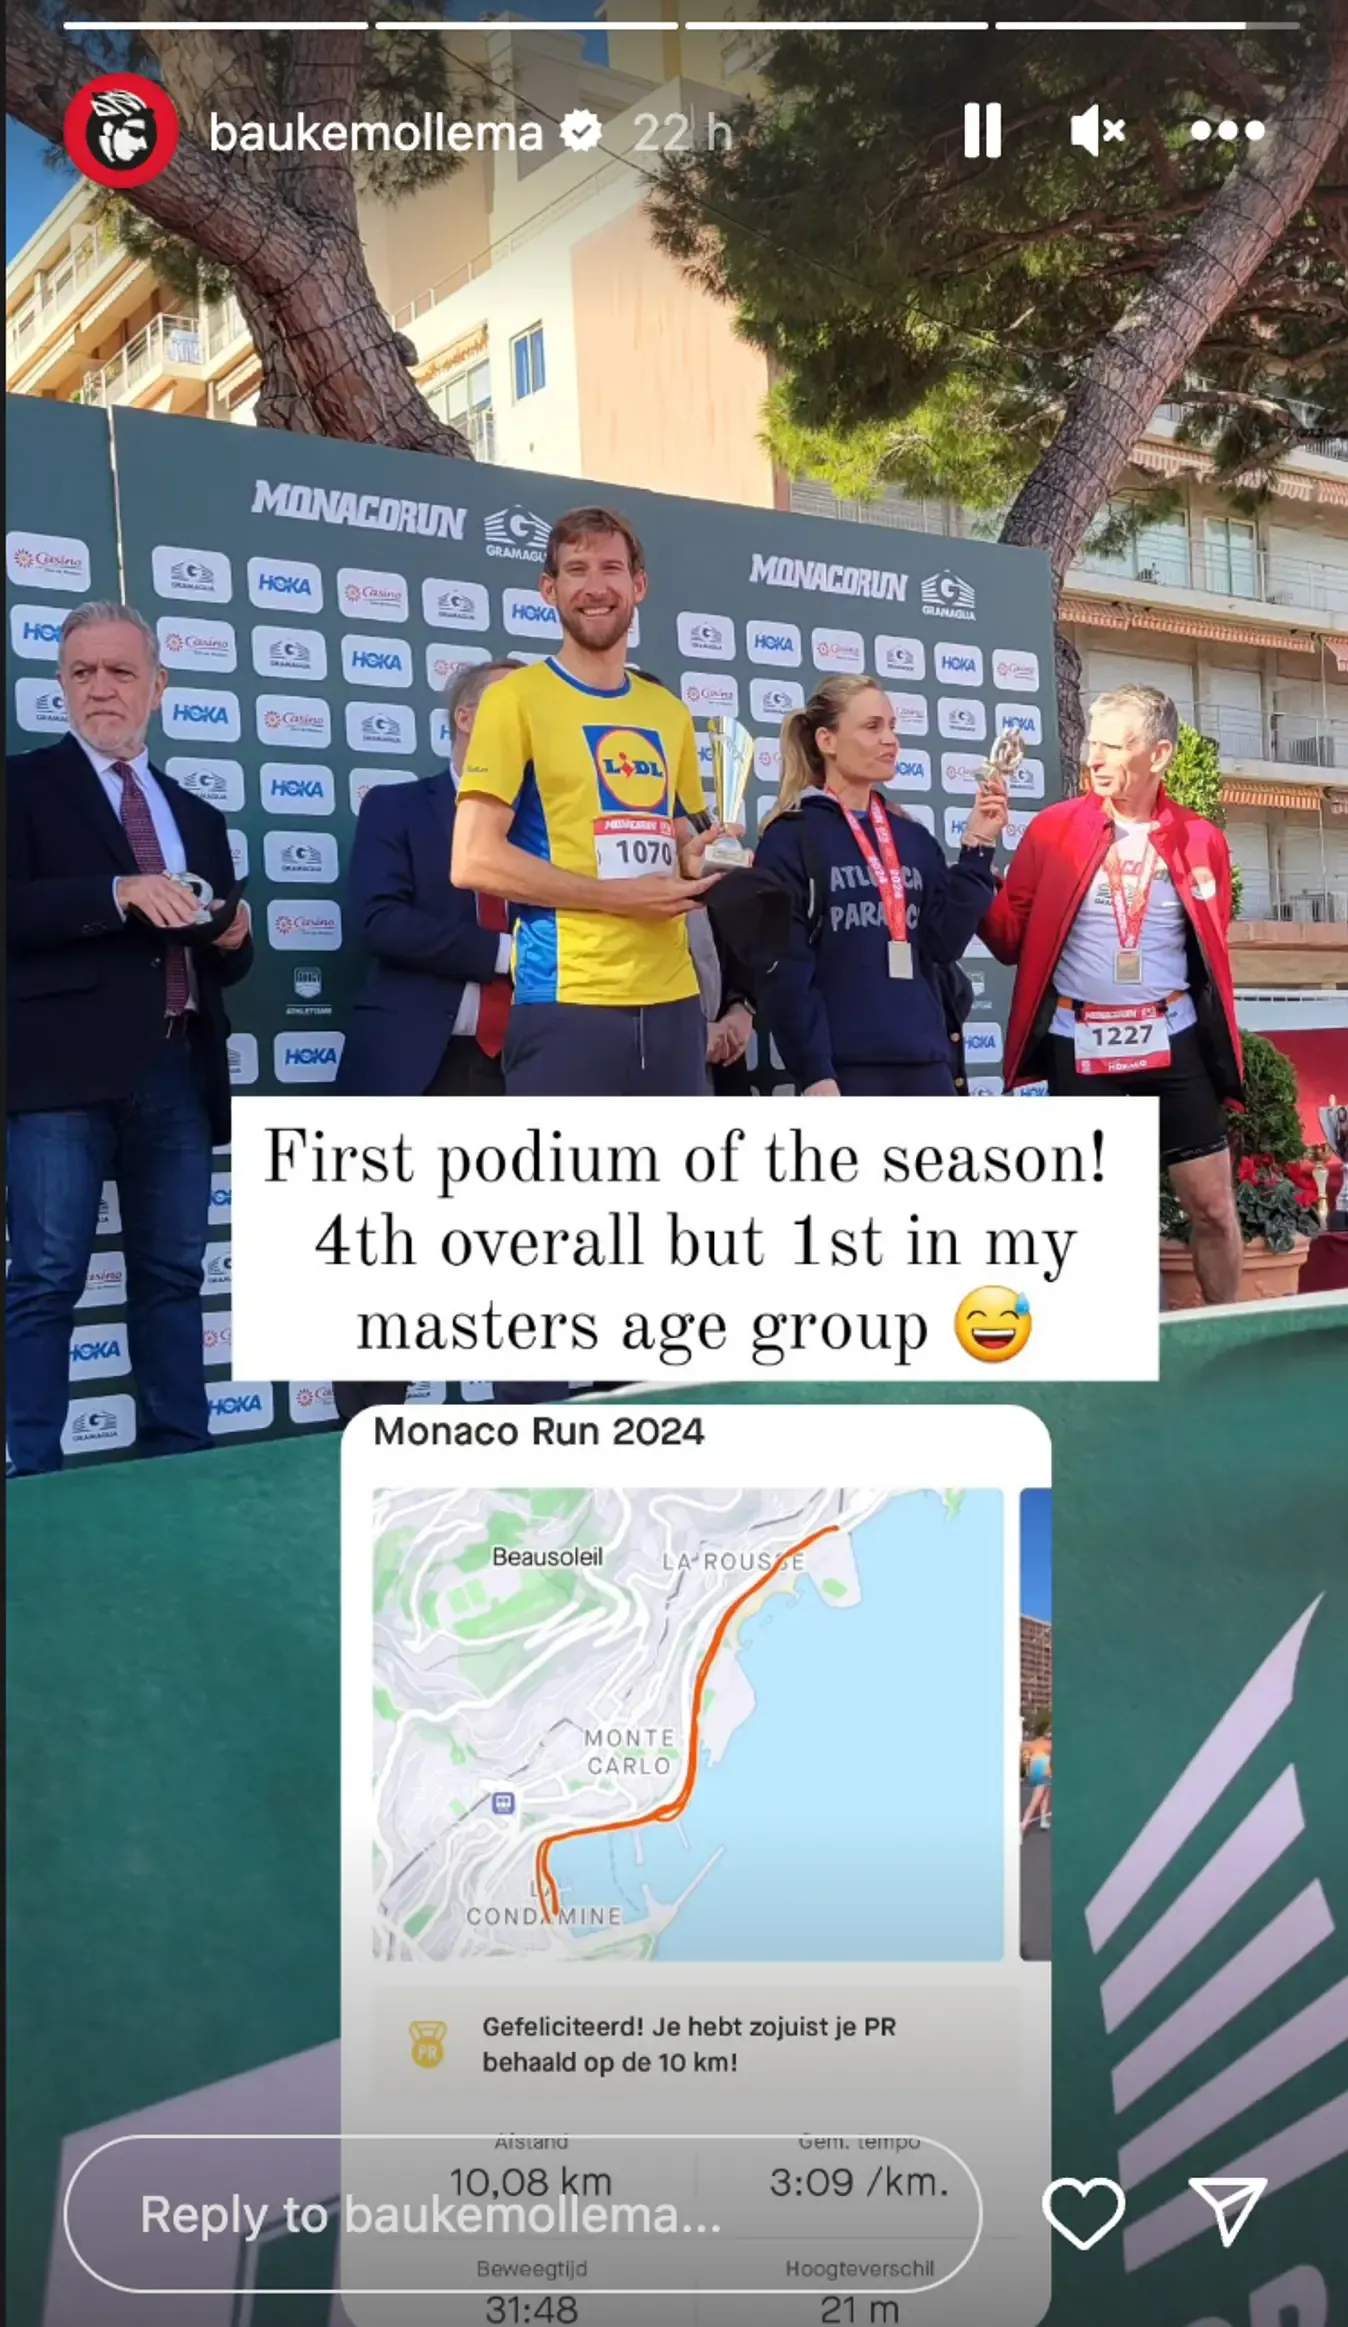 Bauke Mollema takes 'first podium of the season' after clocking 31:48 in Monaco 10km run